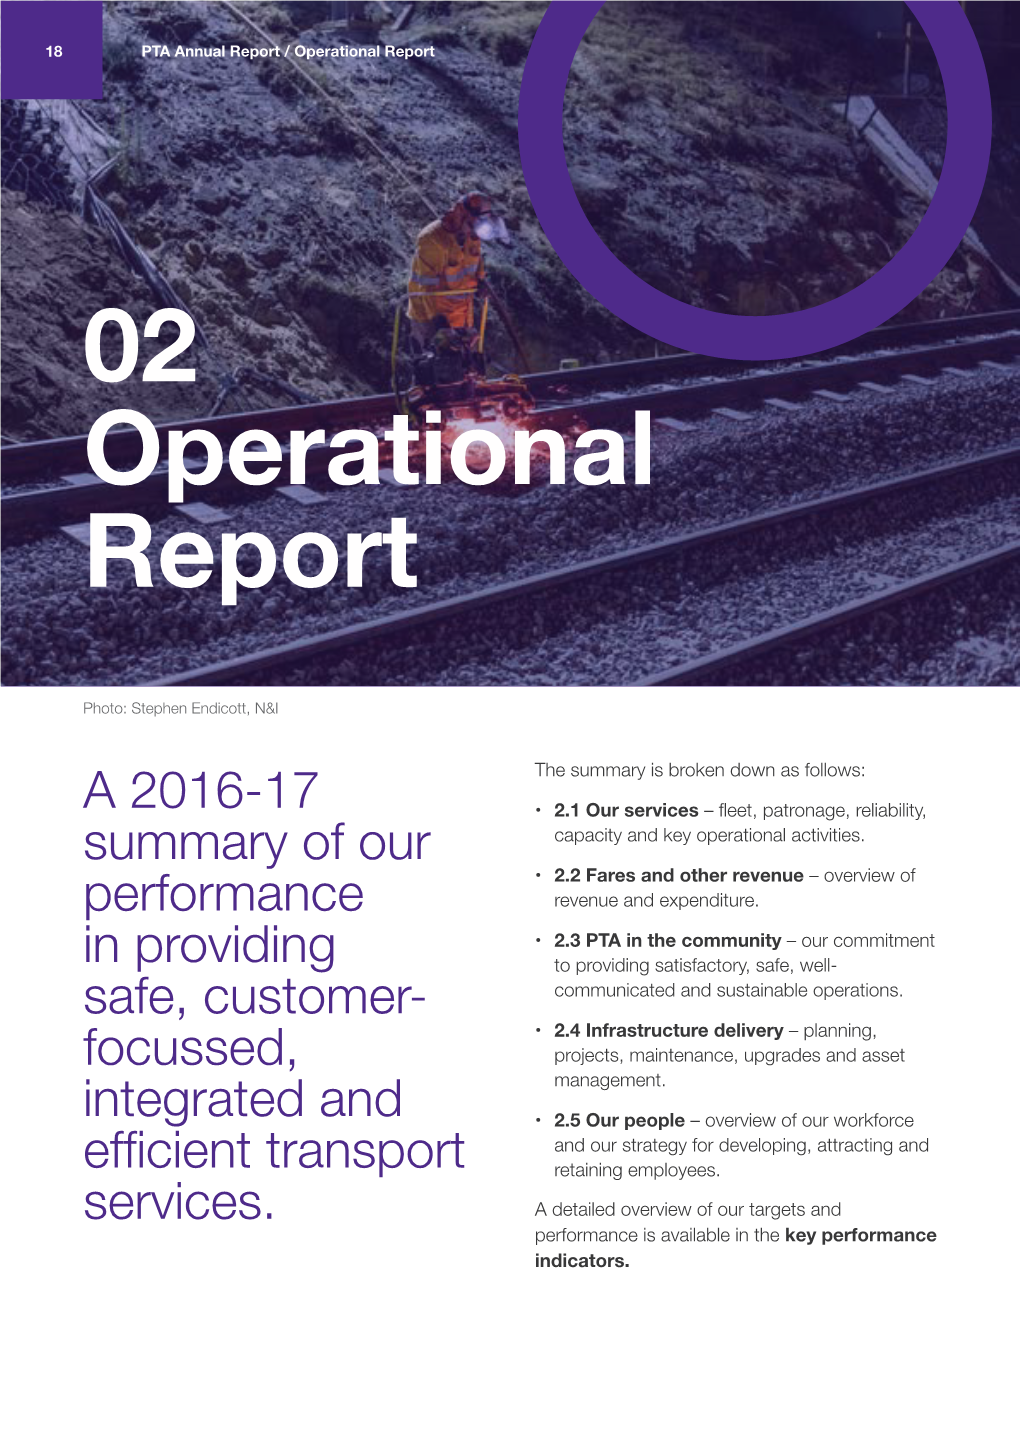 02 Operational Report